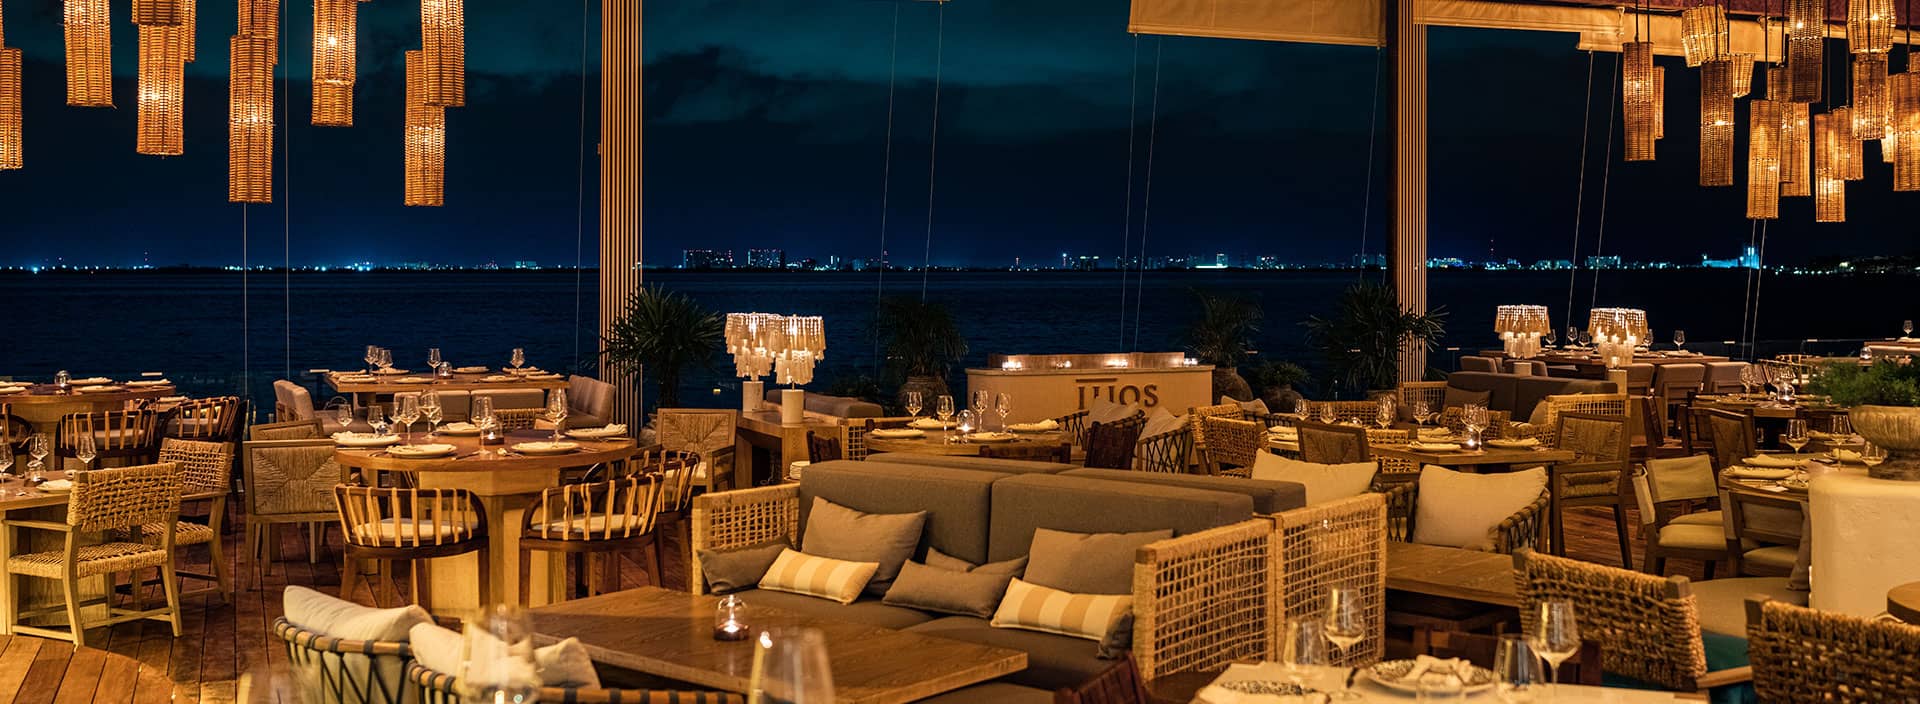 Ilios Restaurant Greek Cancun